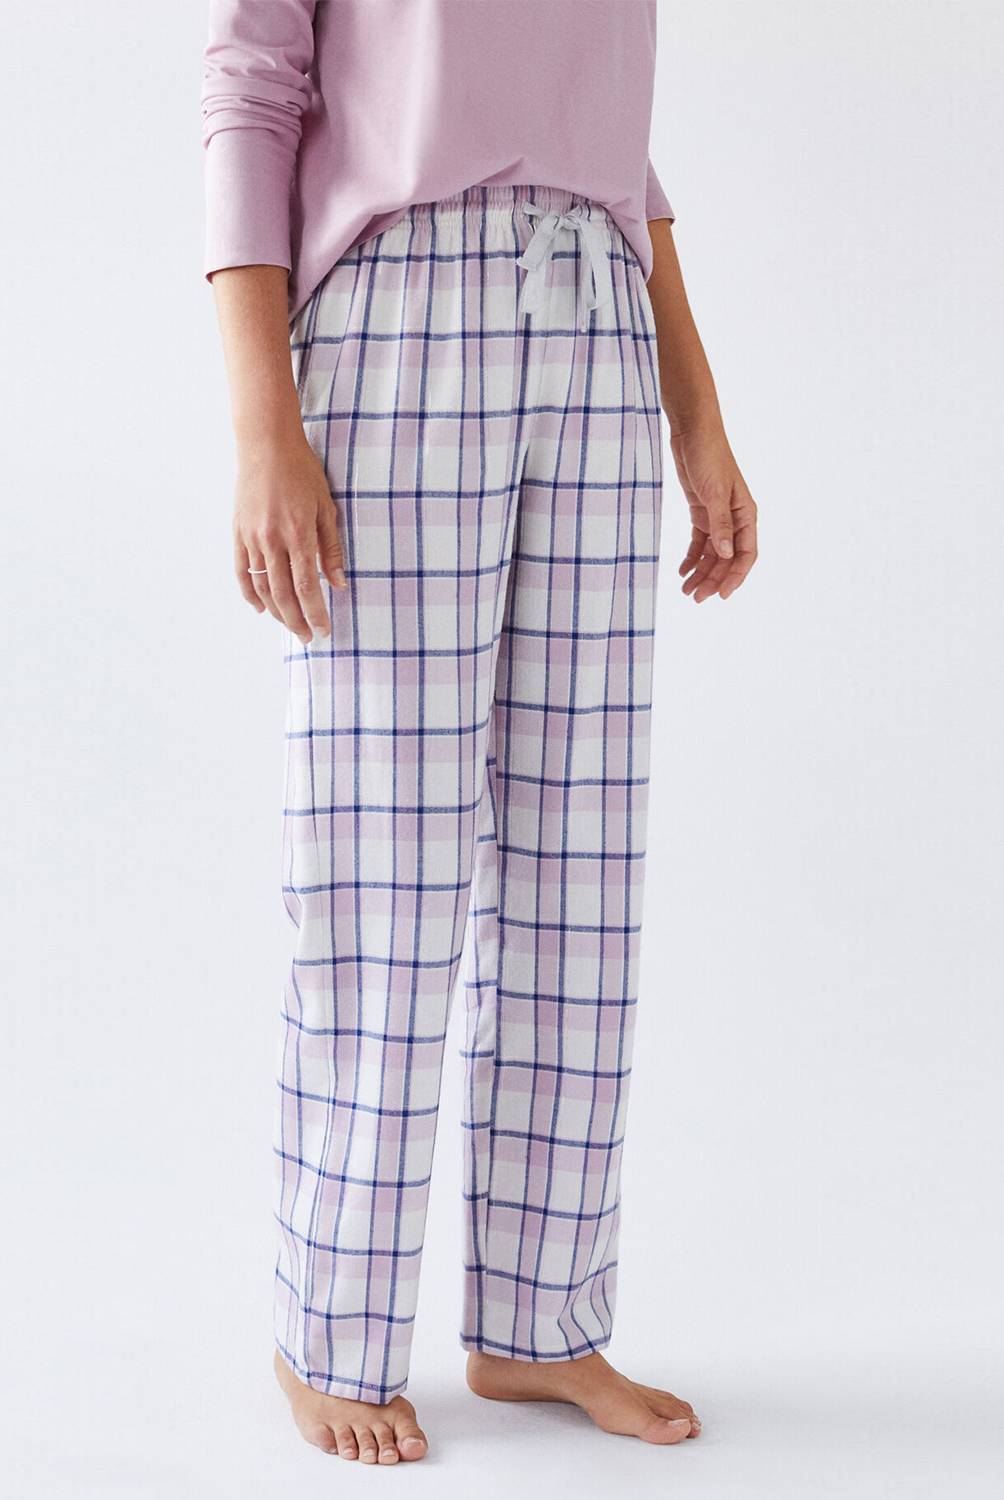 WOMEN SECRET - Pantalón Pijama Mujer